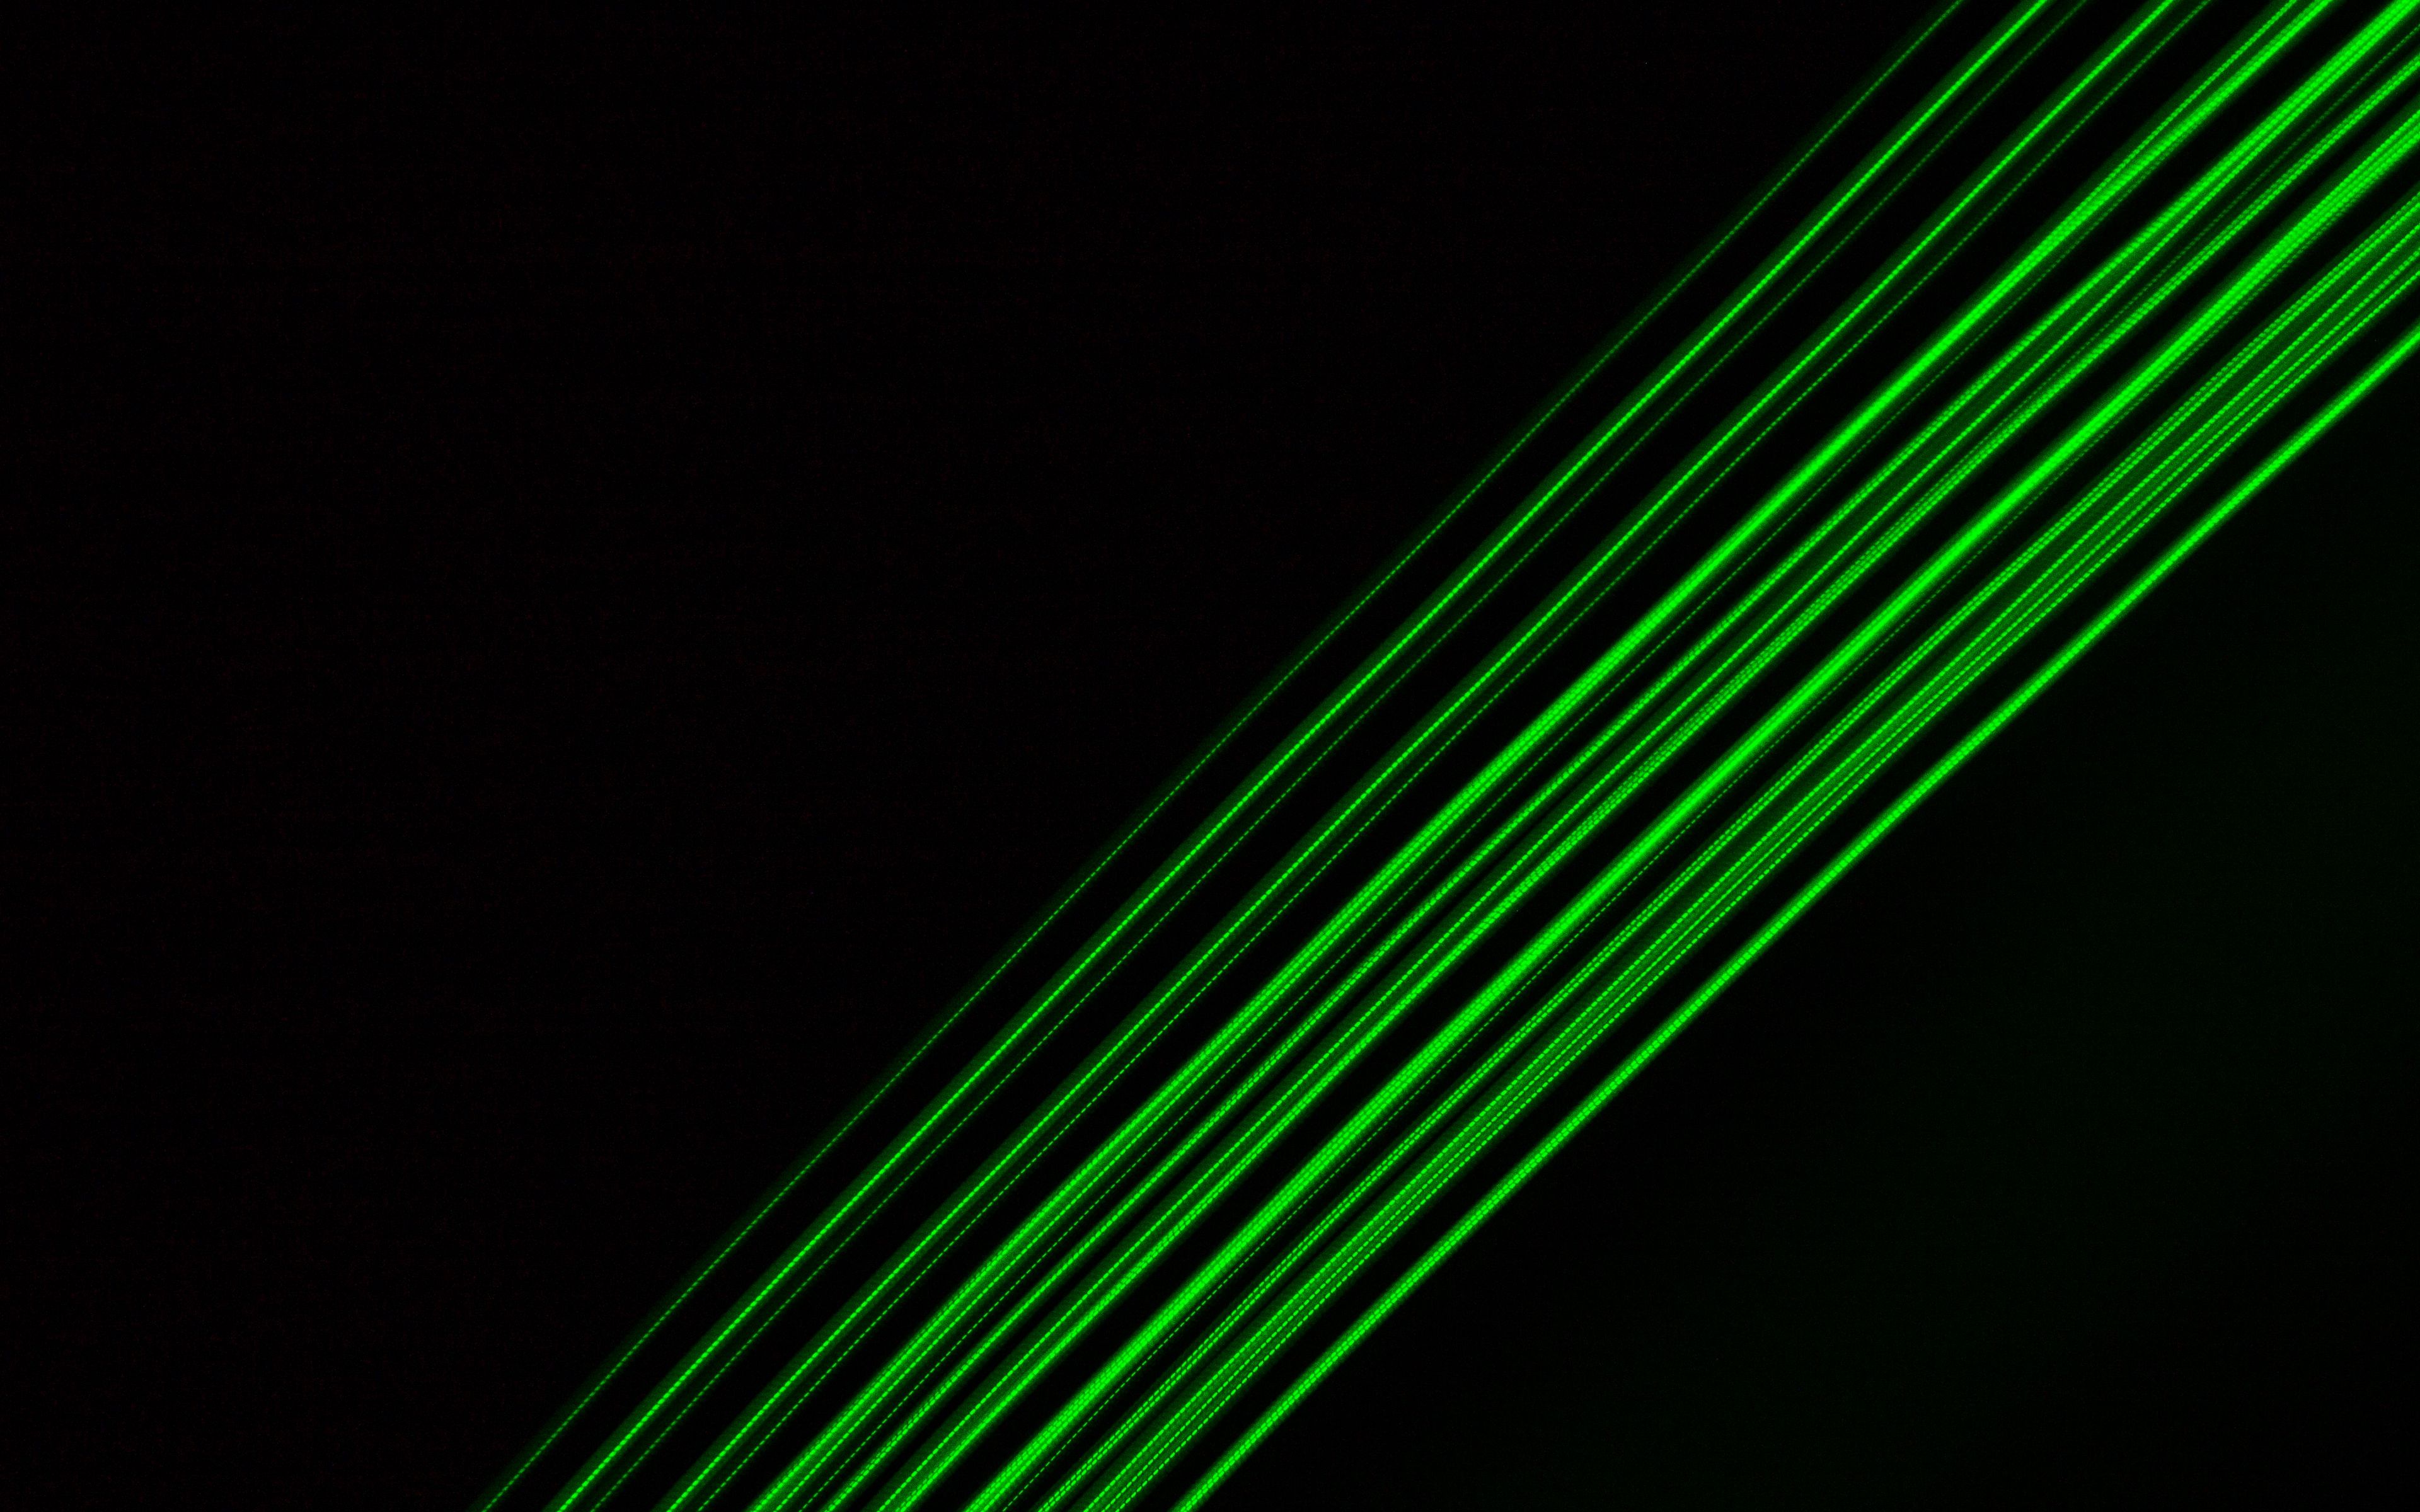 Download wallpaper 3840x2400 stripes, neon, glow, green, black 4k ultra hd  16:10 hd background